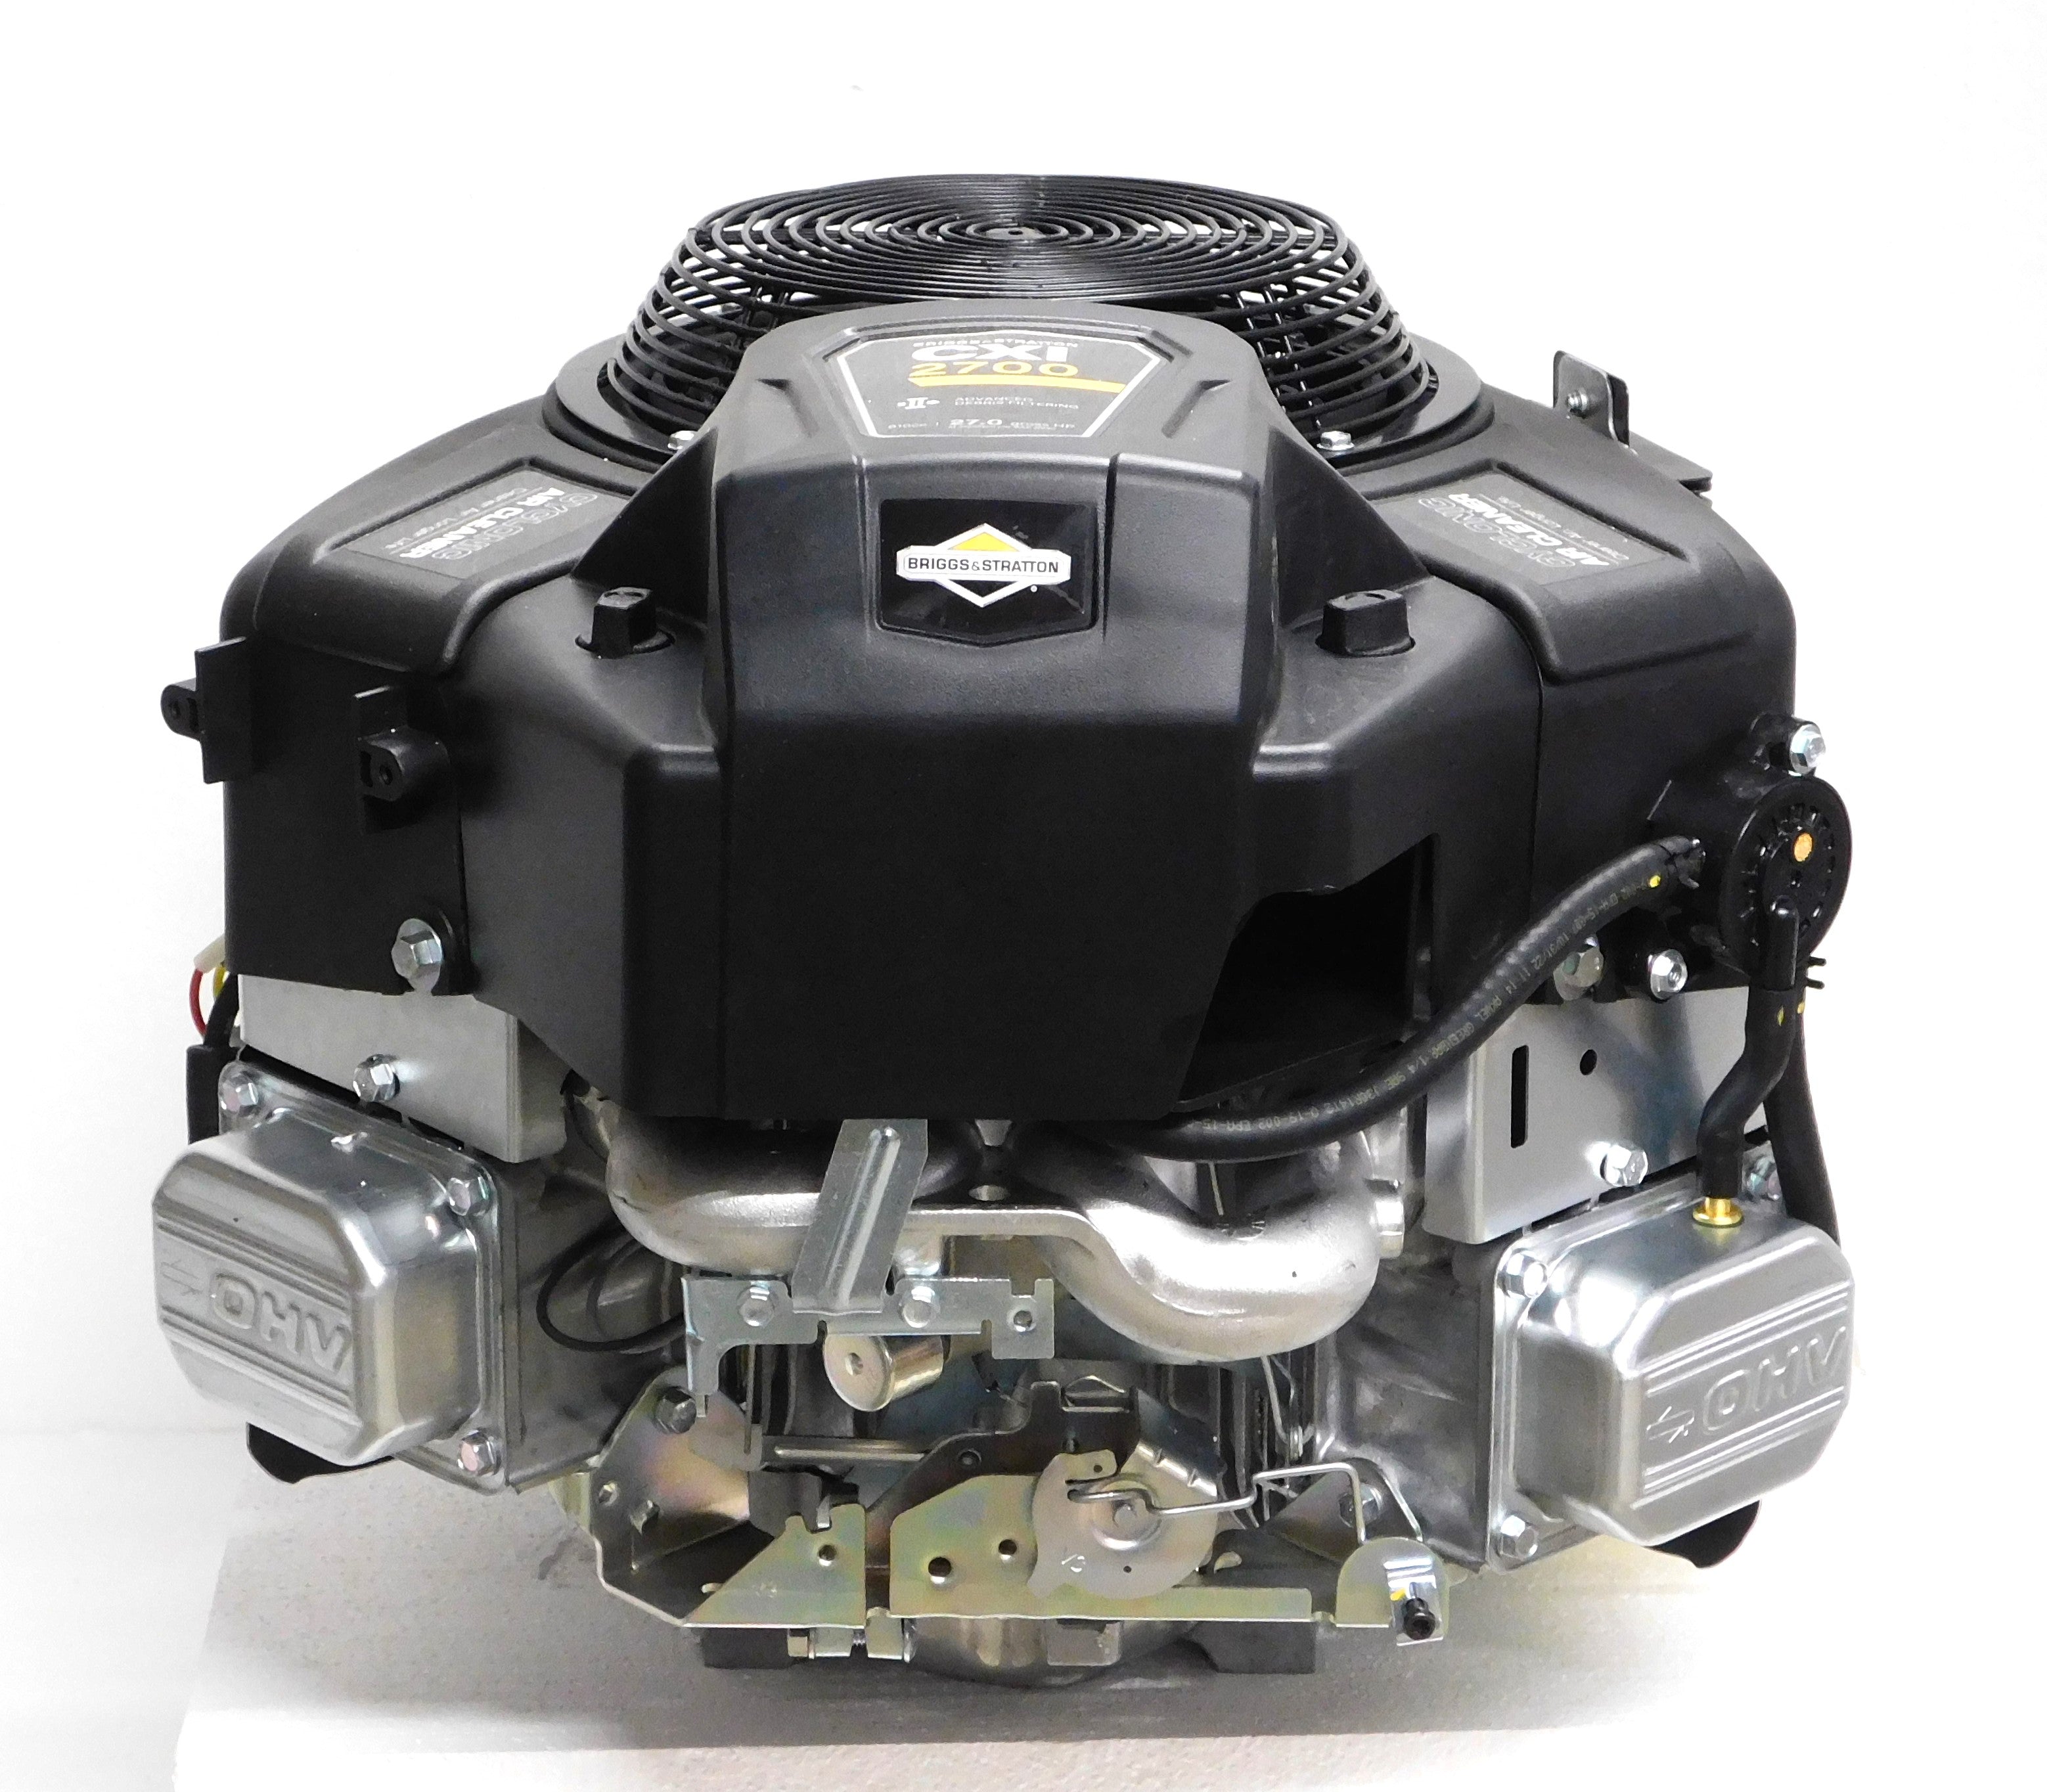 Briggs & Stratton 27 HP 810cc Professional Series Engine 1-1/8 x 4-5/16 #49T877-0025